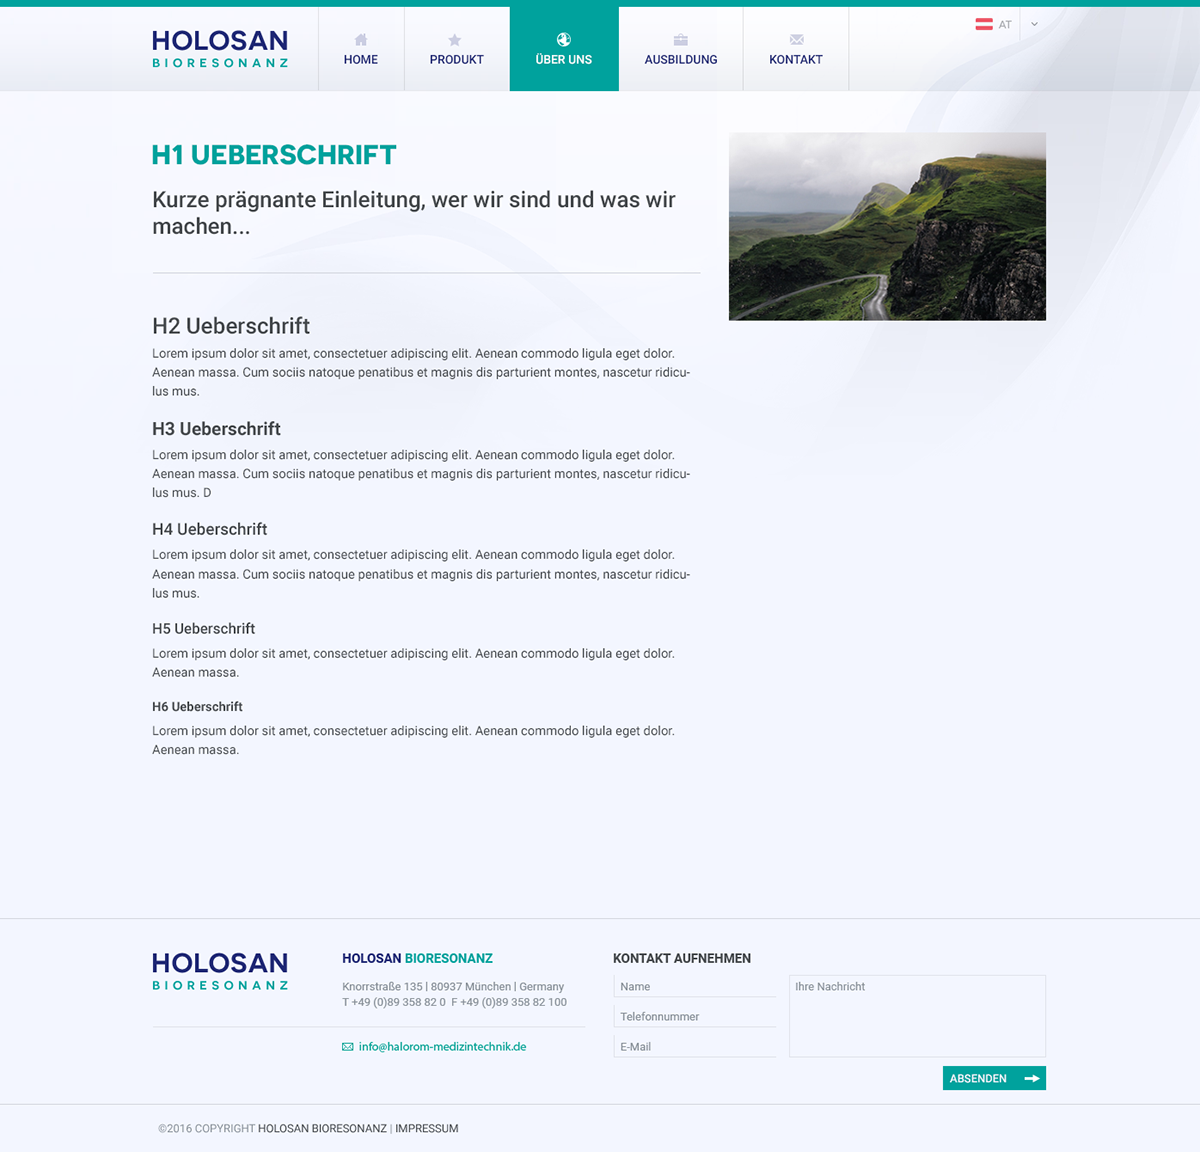 Webdesign Bioresonanz Medizin clean product landingpage